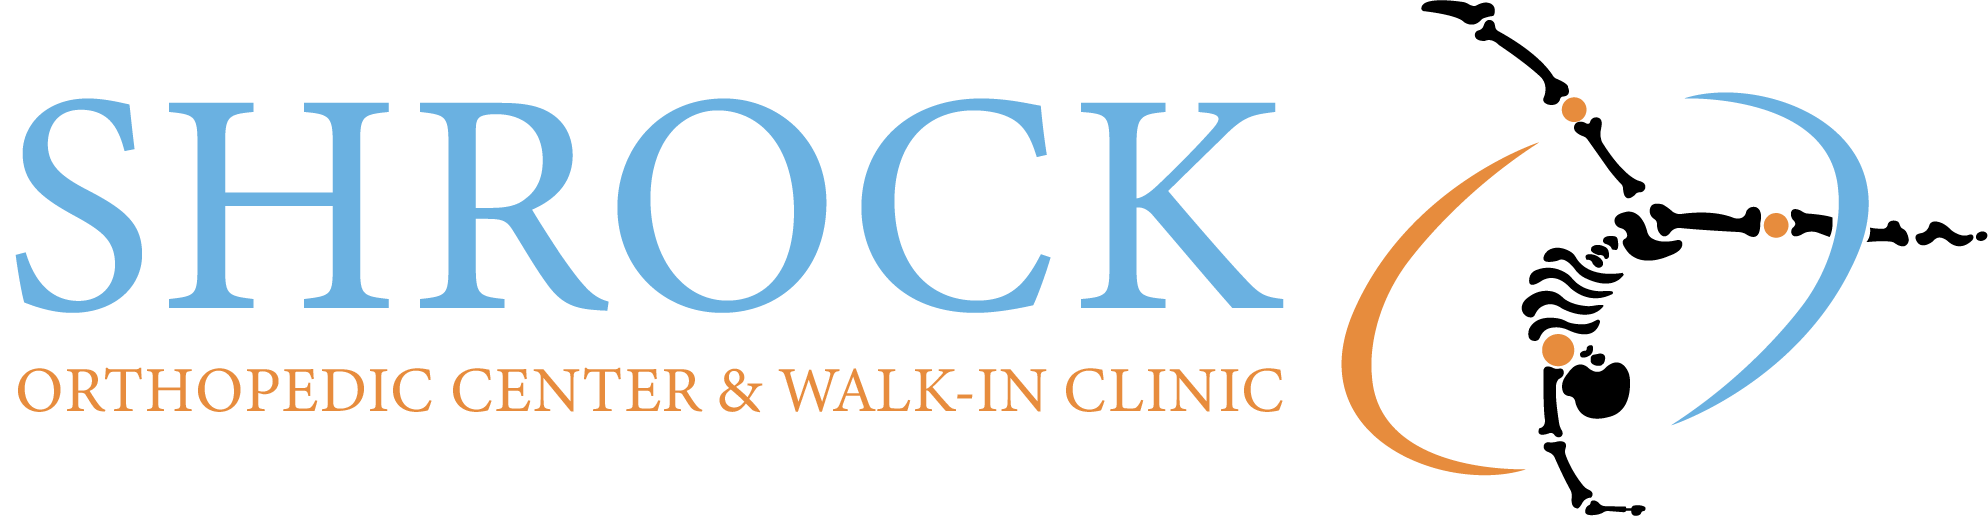 Shrock Orthopedic Center & Walk-In Clinic